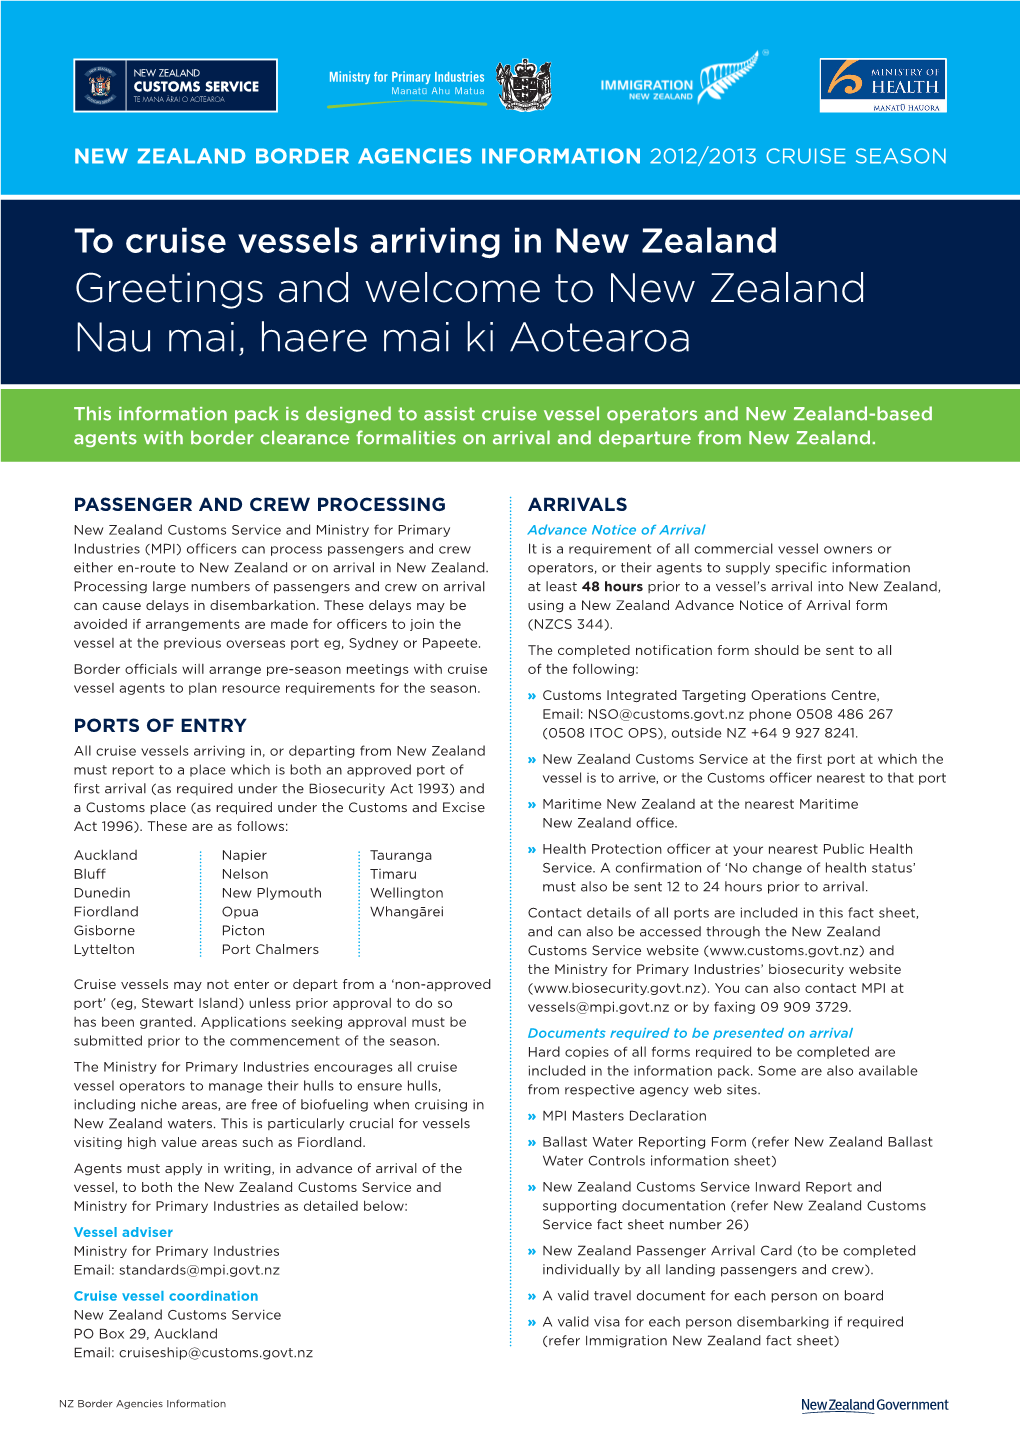 New Zealand Border Agencies Information – Cruise Vessels